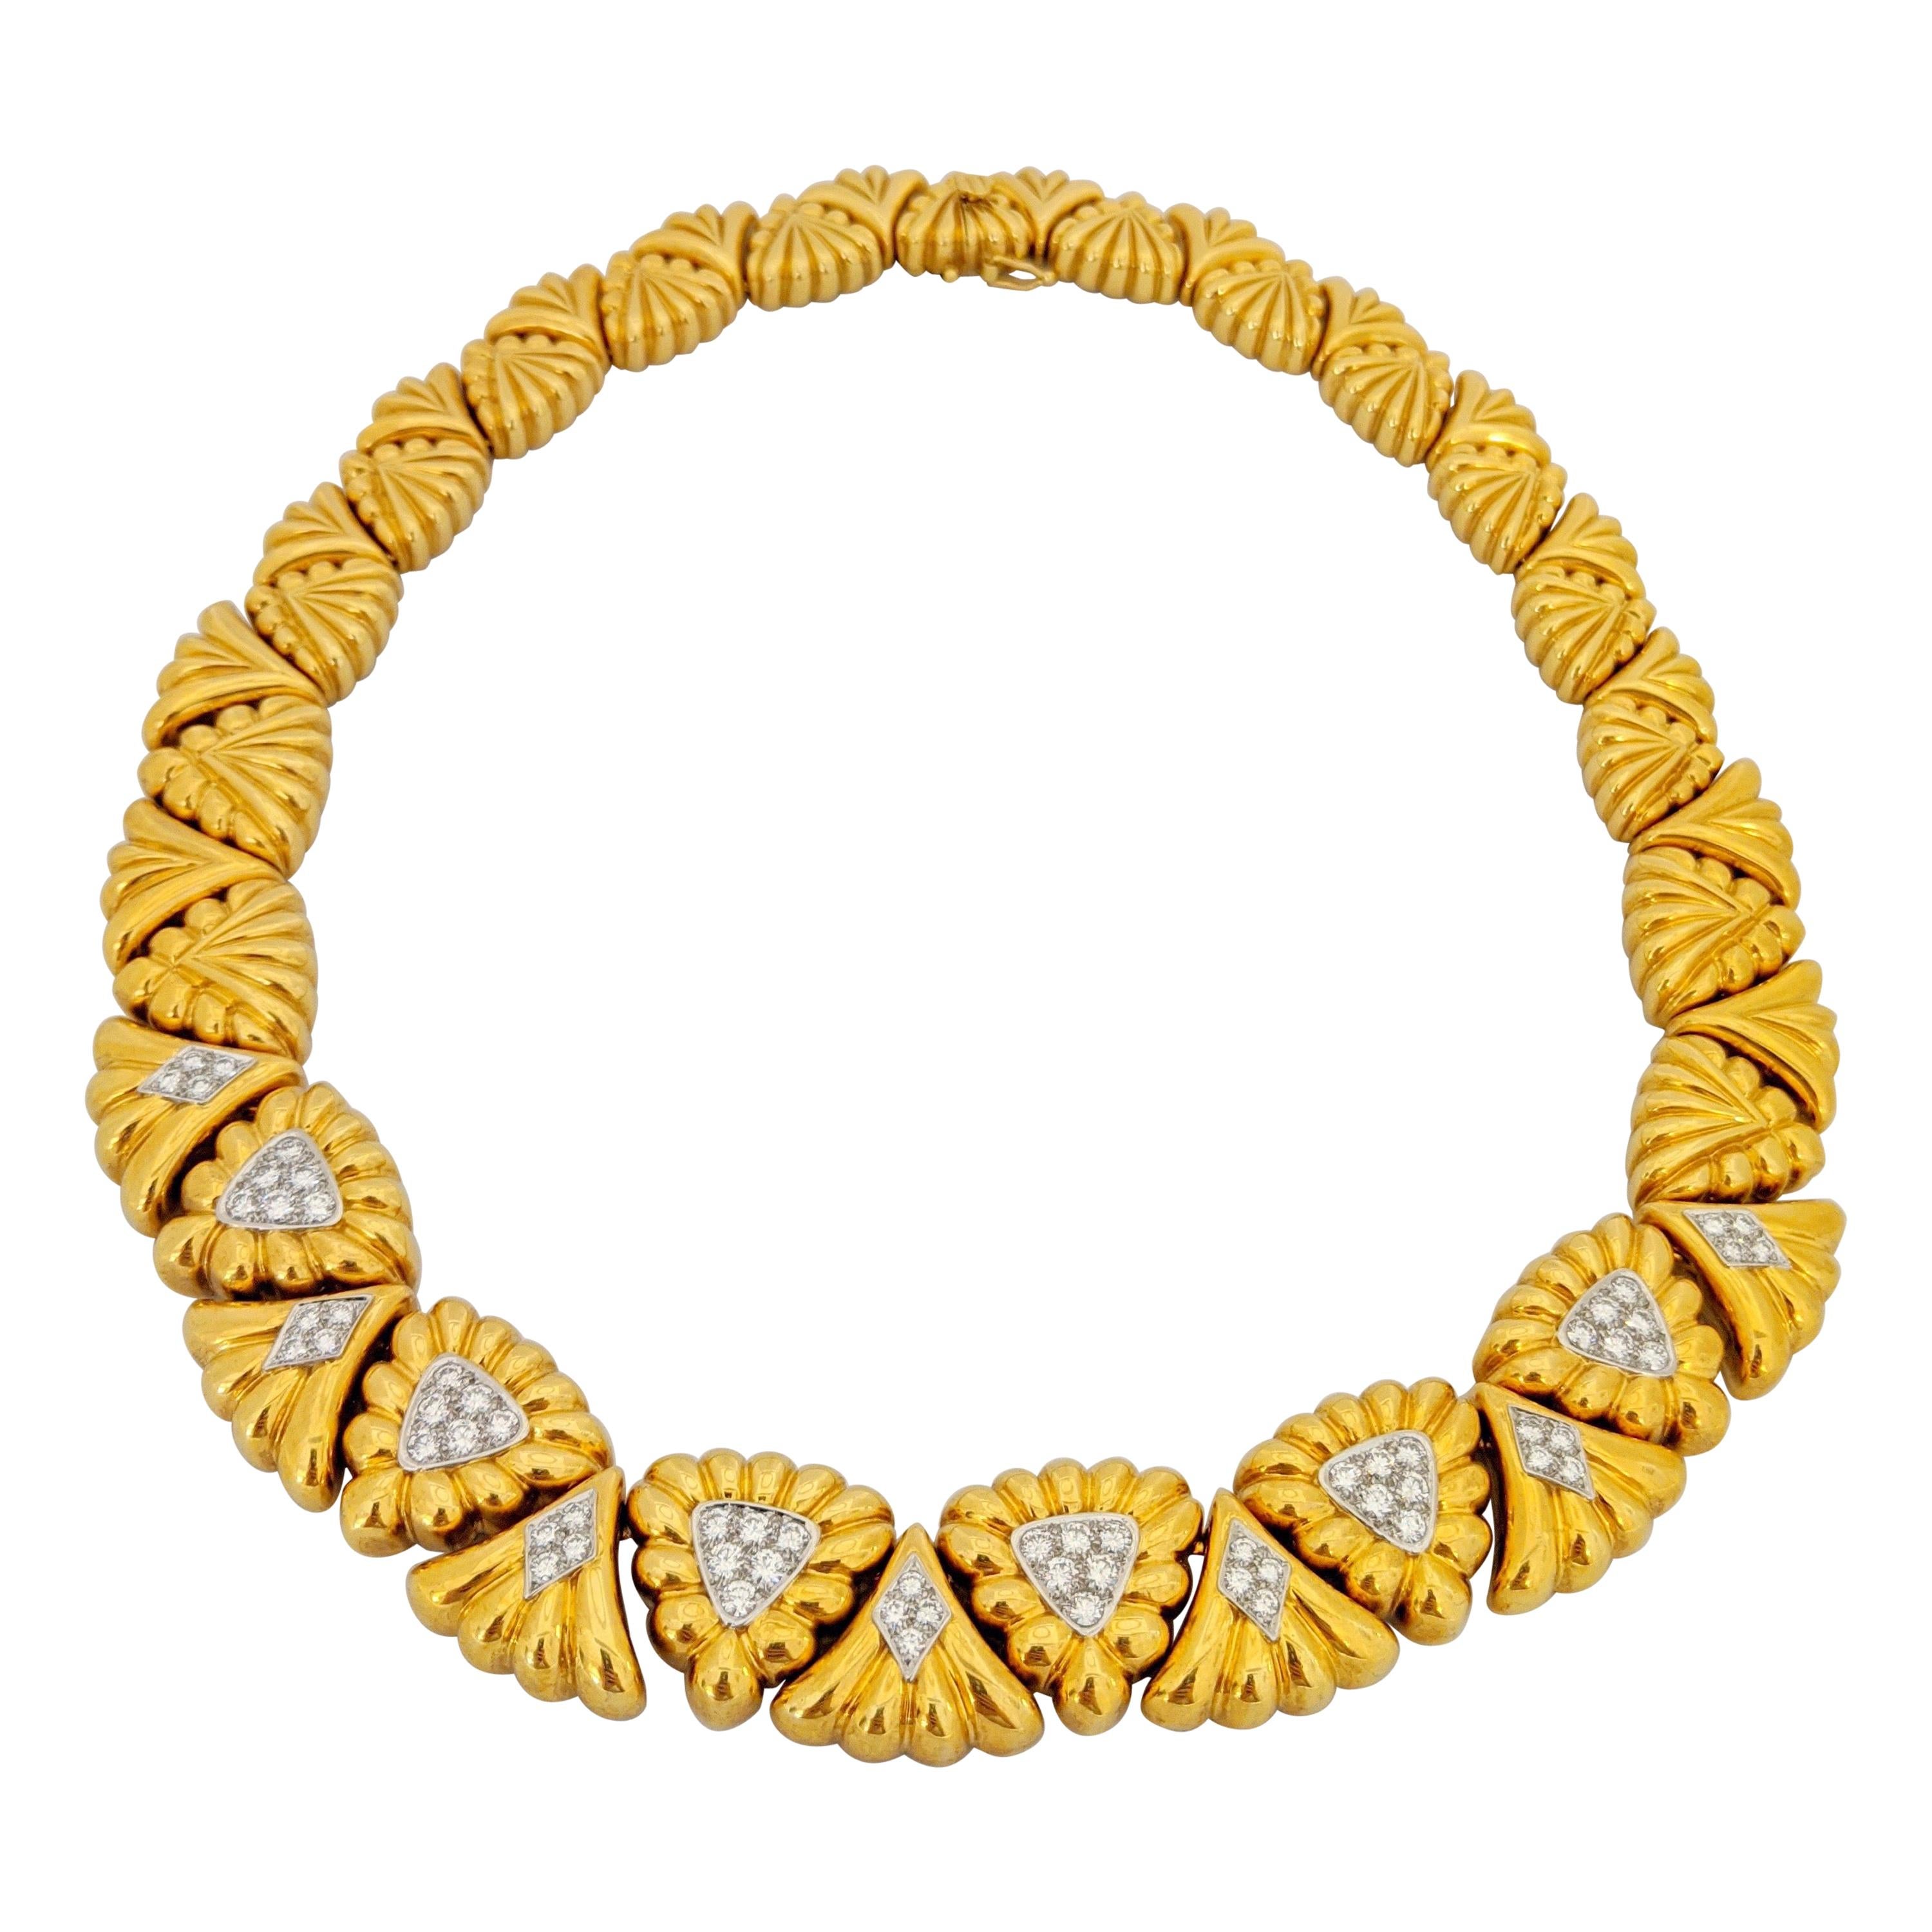 Chaavae Platinum and 18 Karat Yellow Gold and 2.92 Carat Diamond Collar Necklace